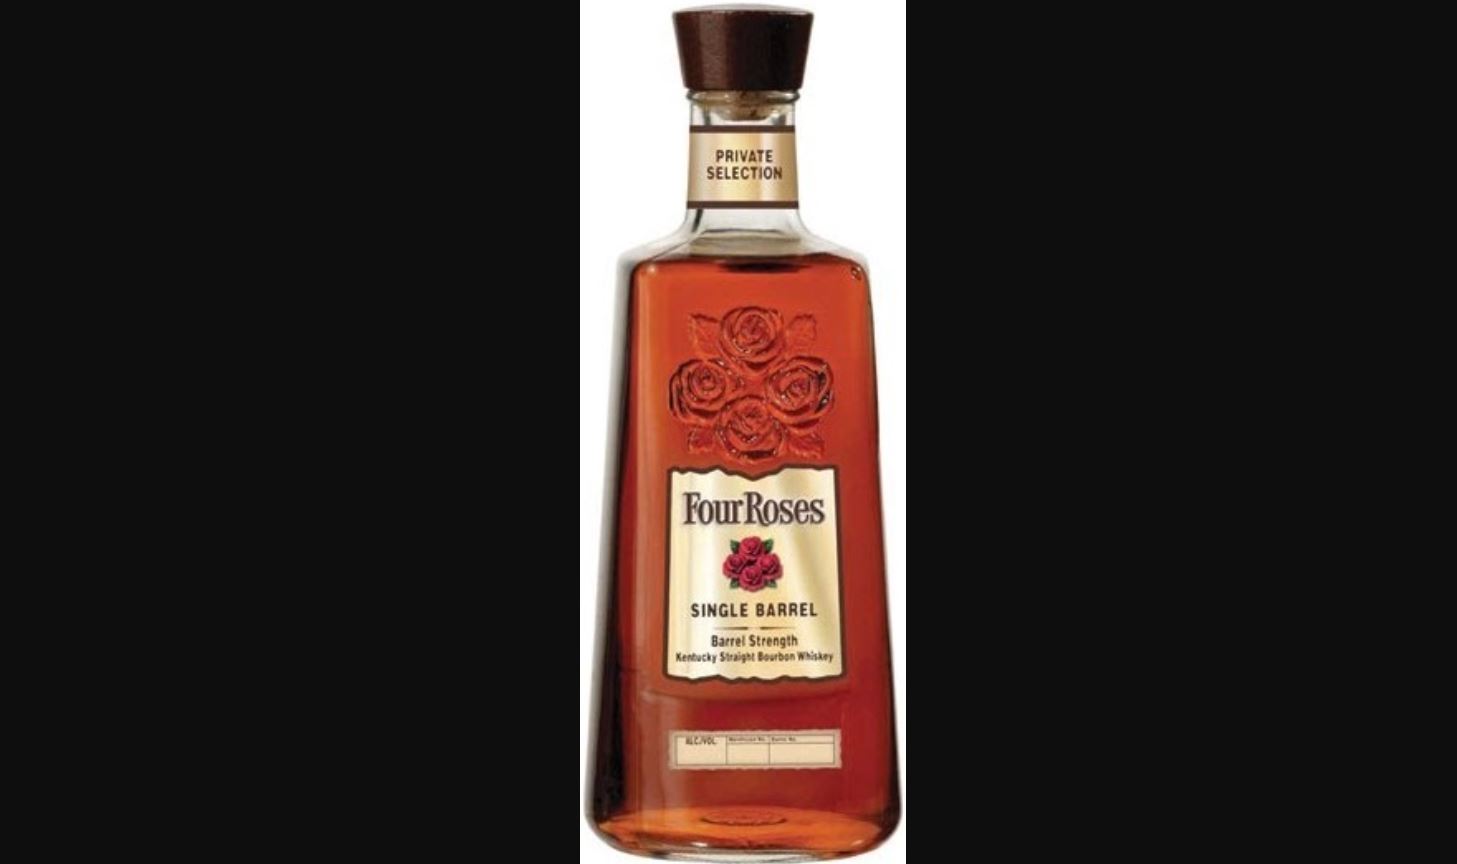 Four Roses Private Selection Barrel Strength Bourbon